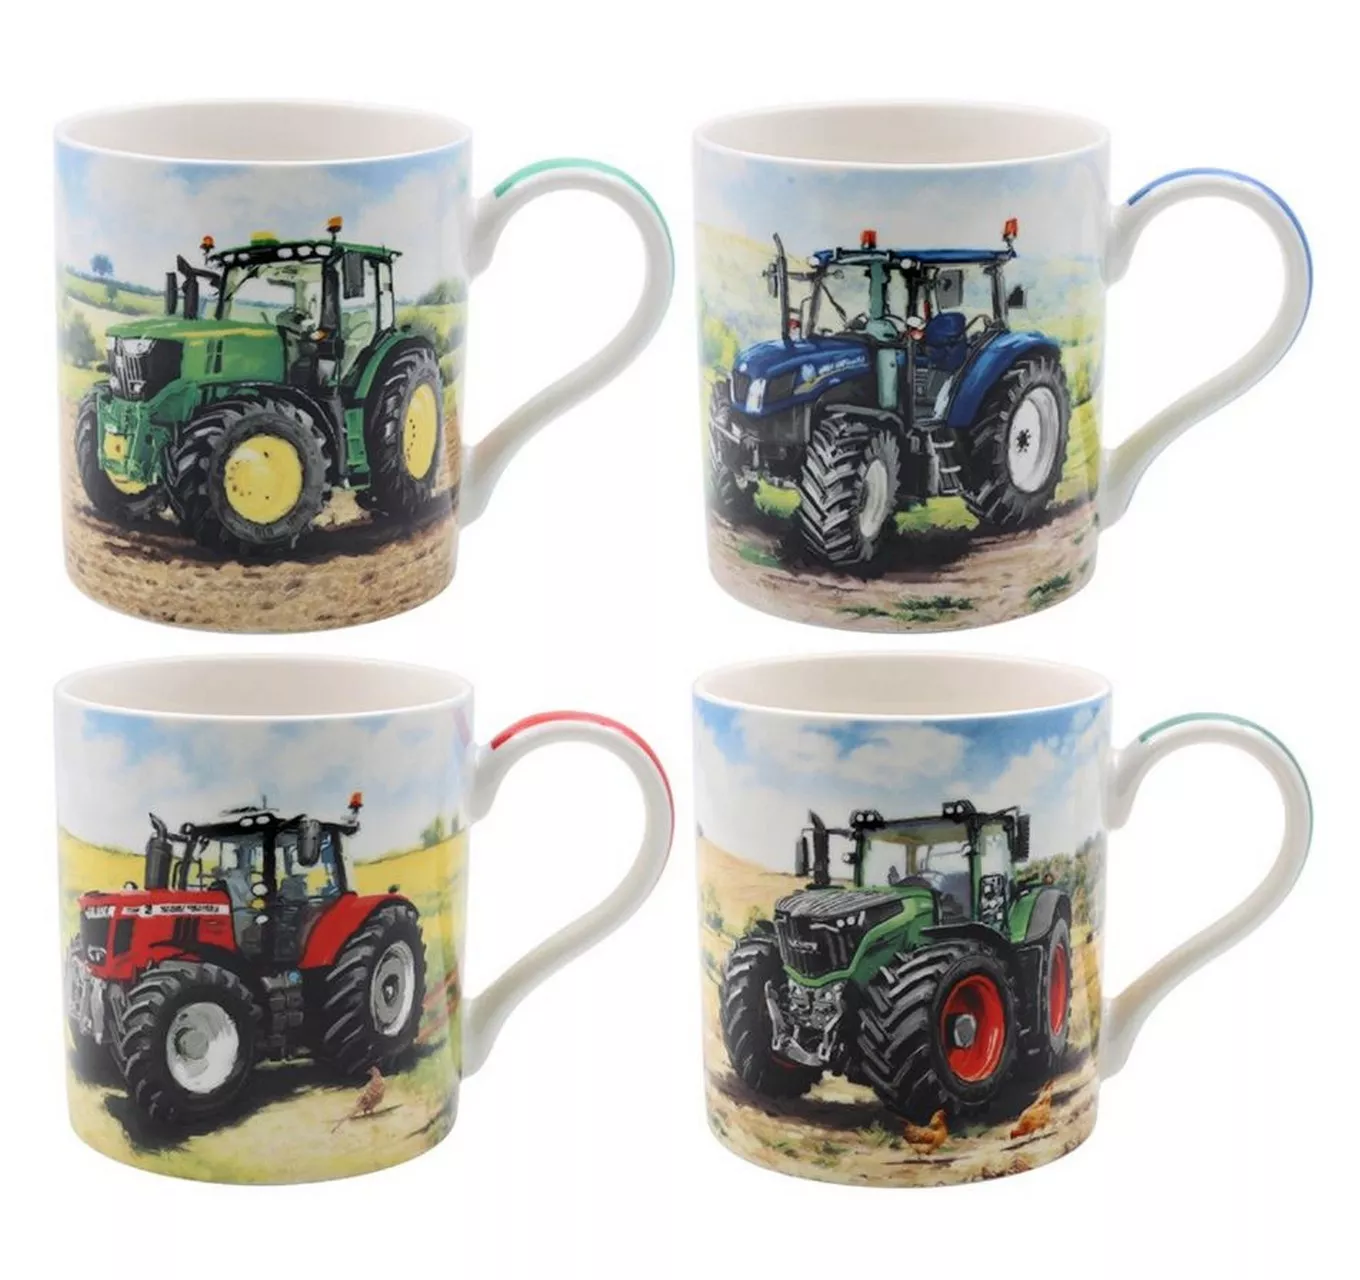 Tractor Mug - Each